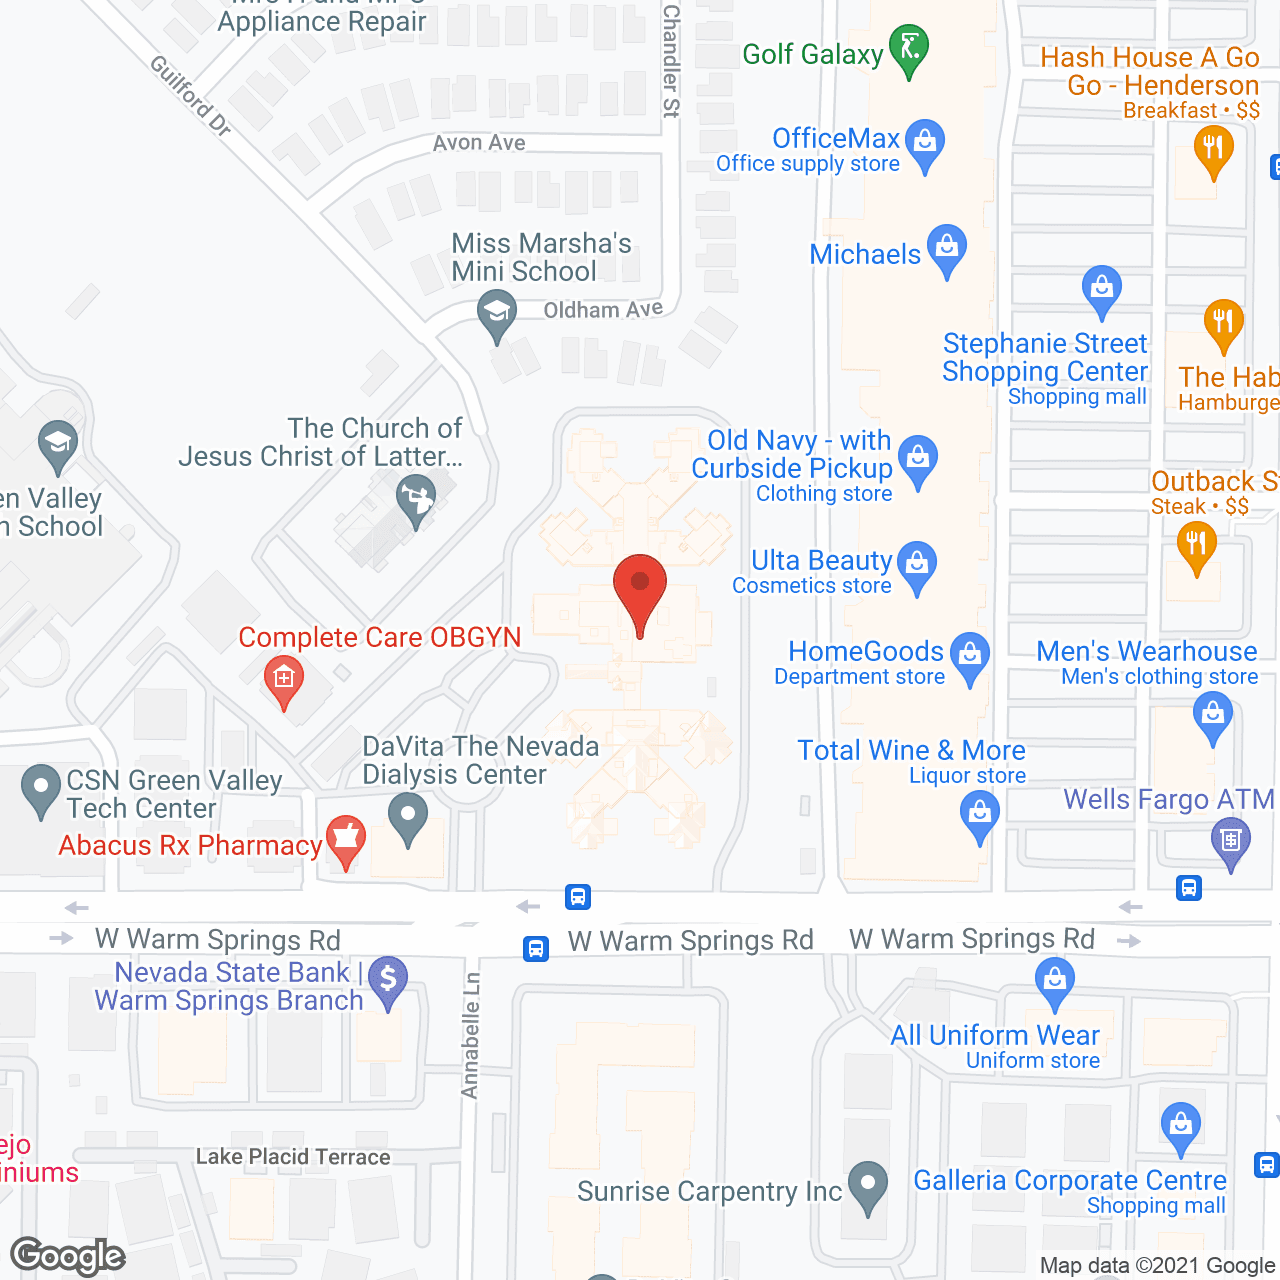 TLC Care Center in google map